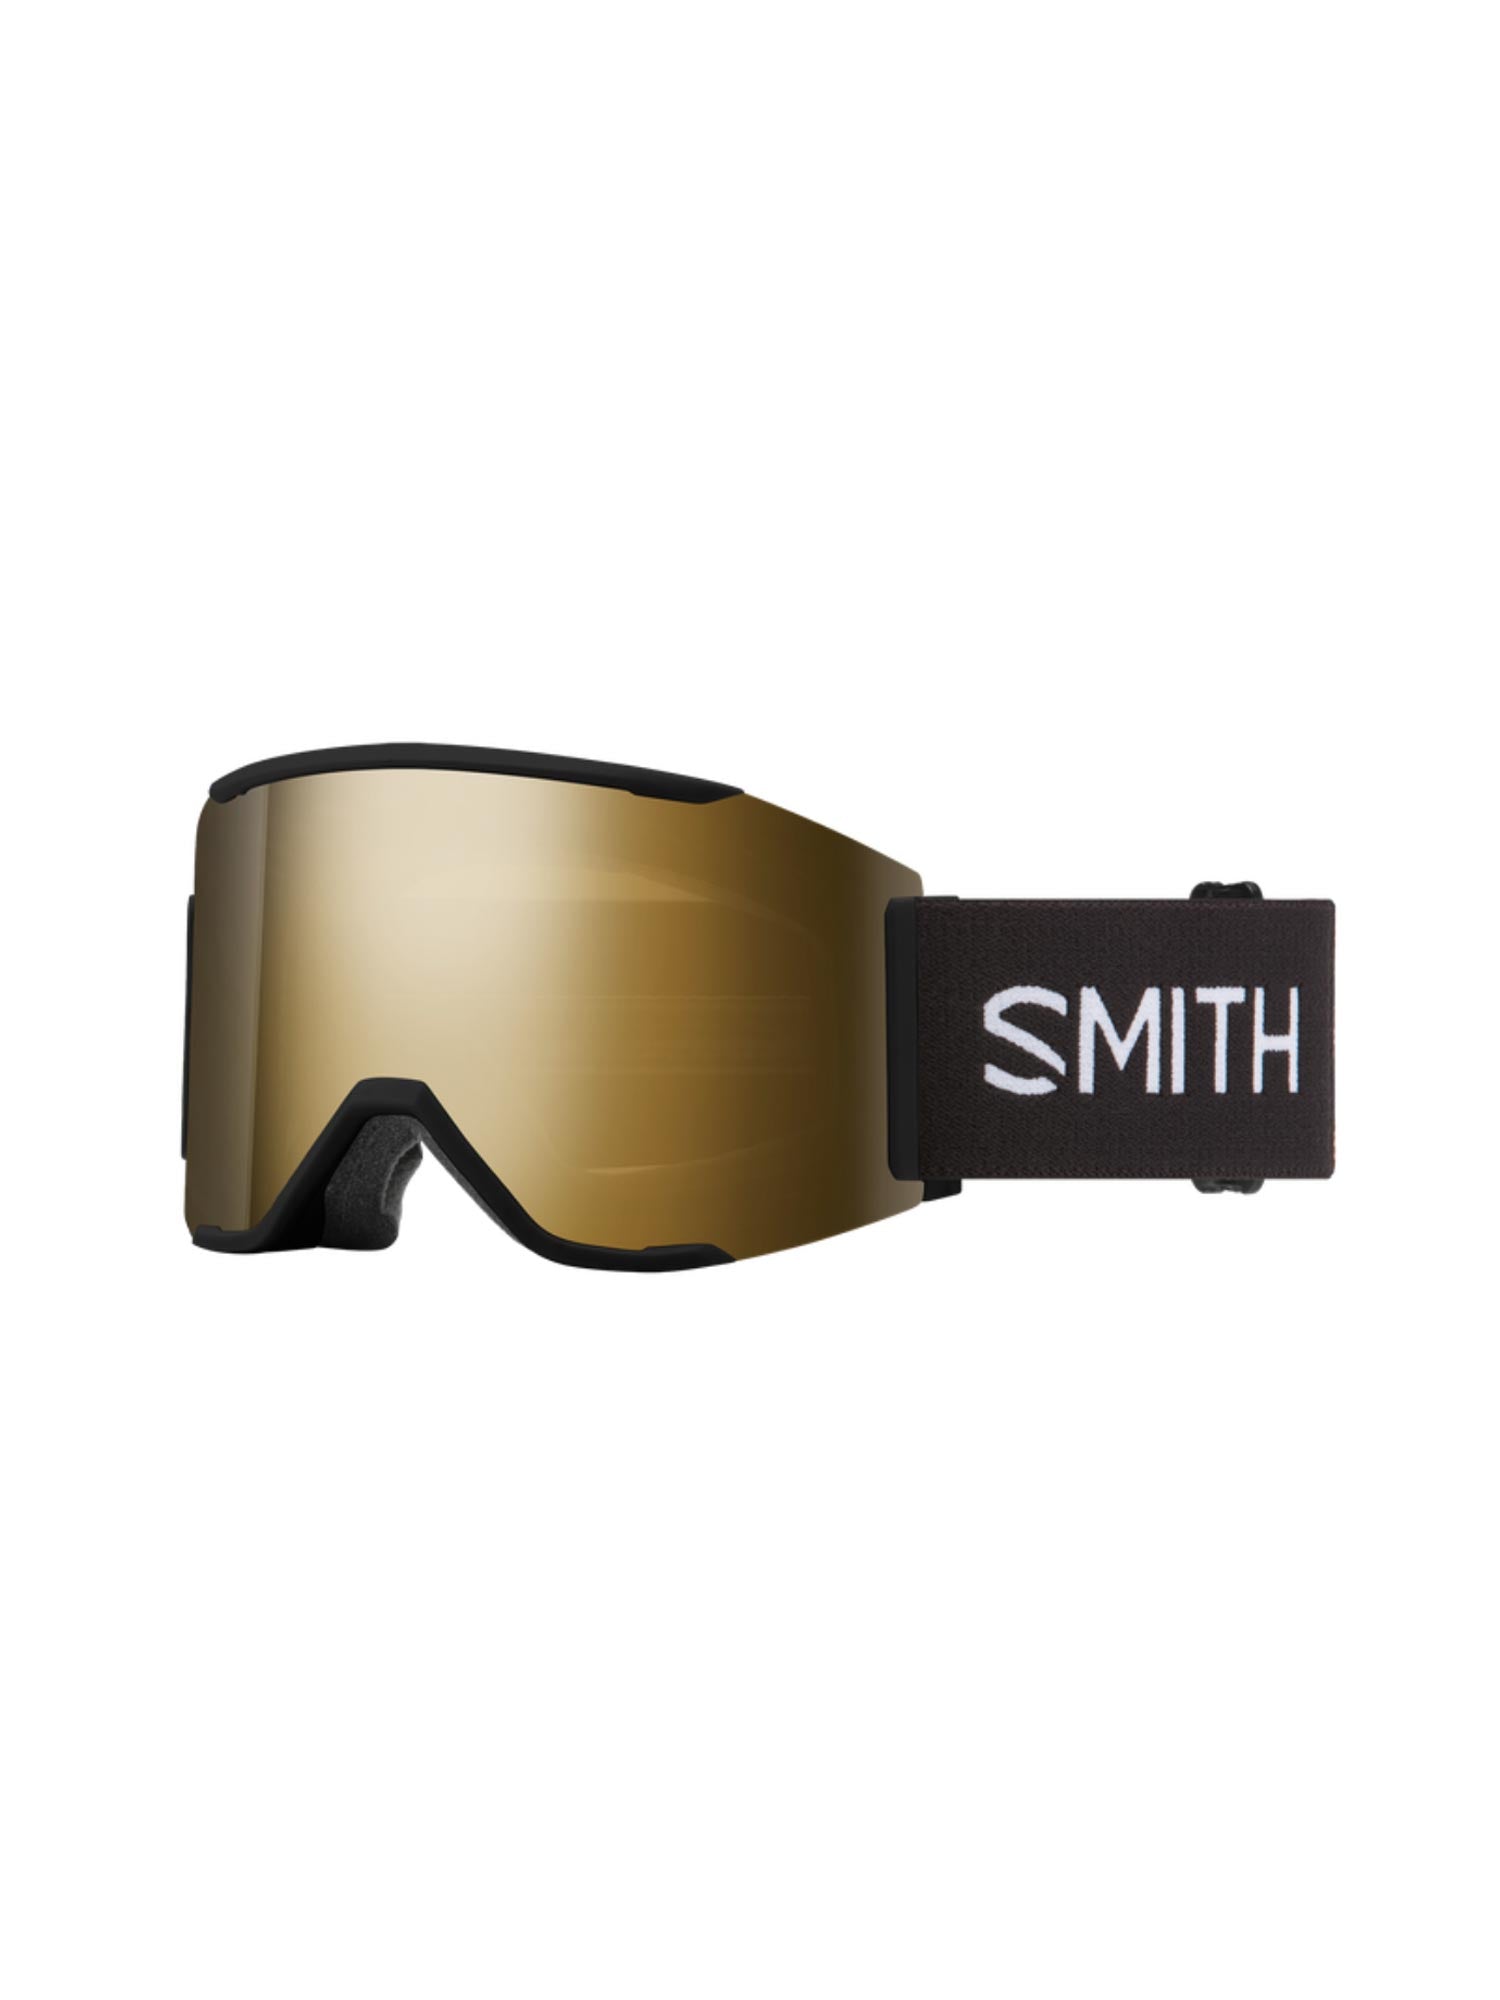 Smith Squad Mag goggles black strap gold lens